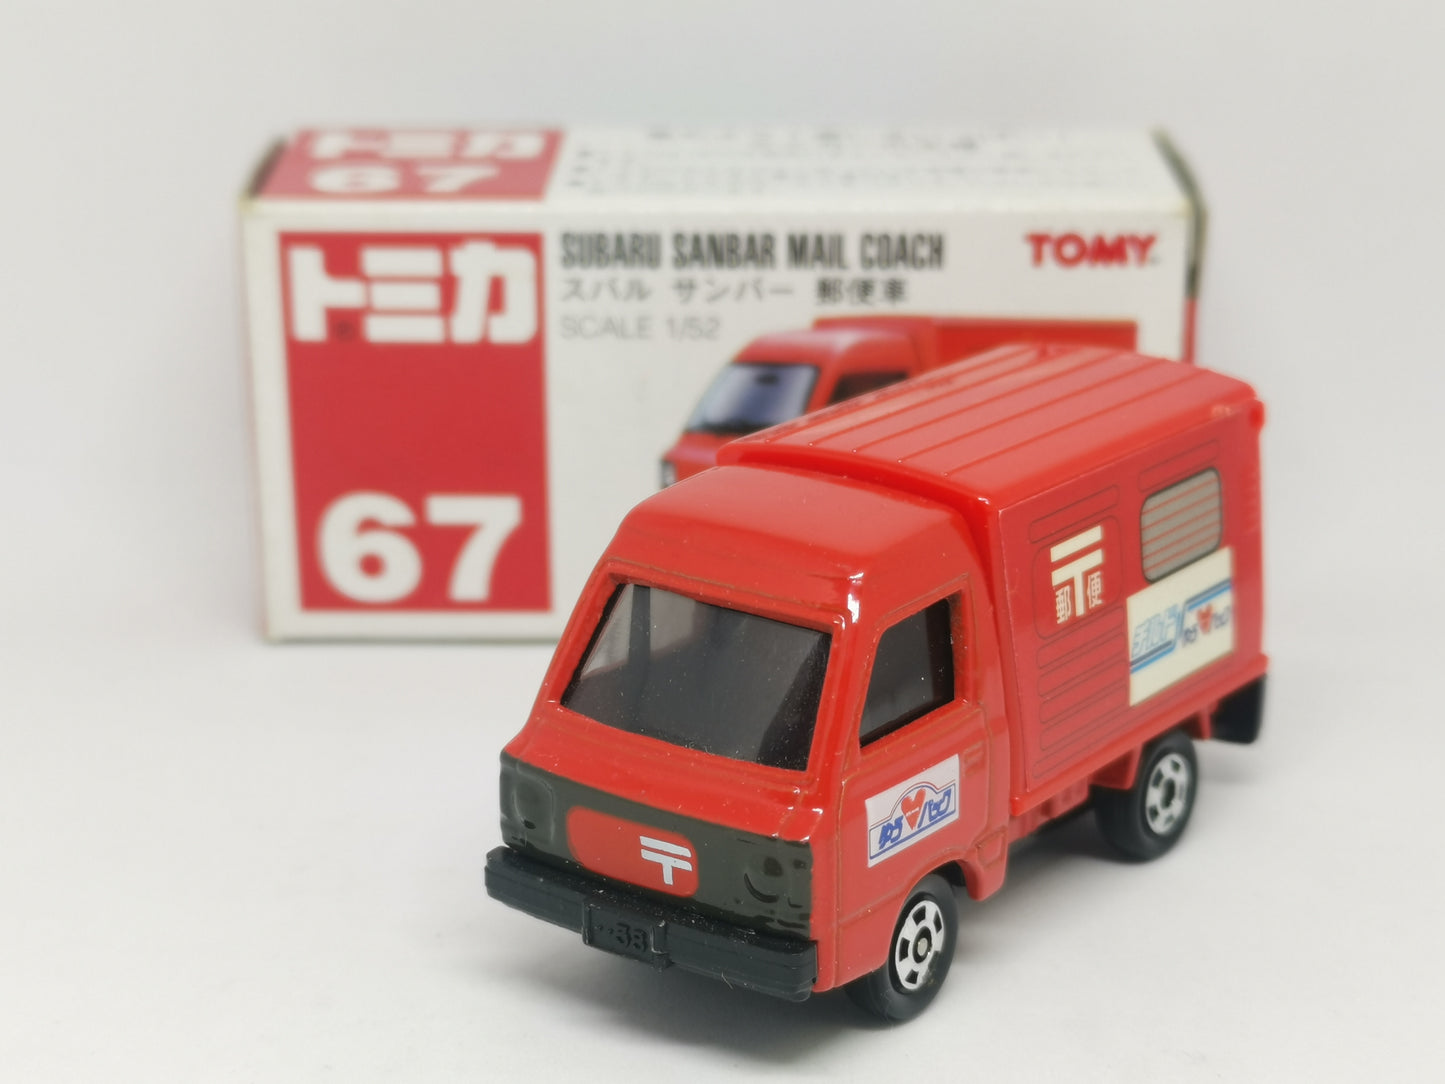 Tomica #67 Subaru Sanbar Mail Coach